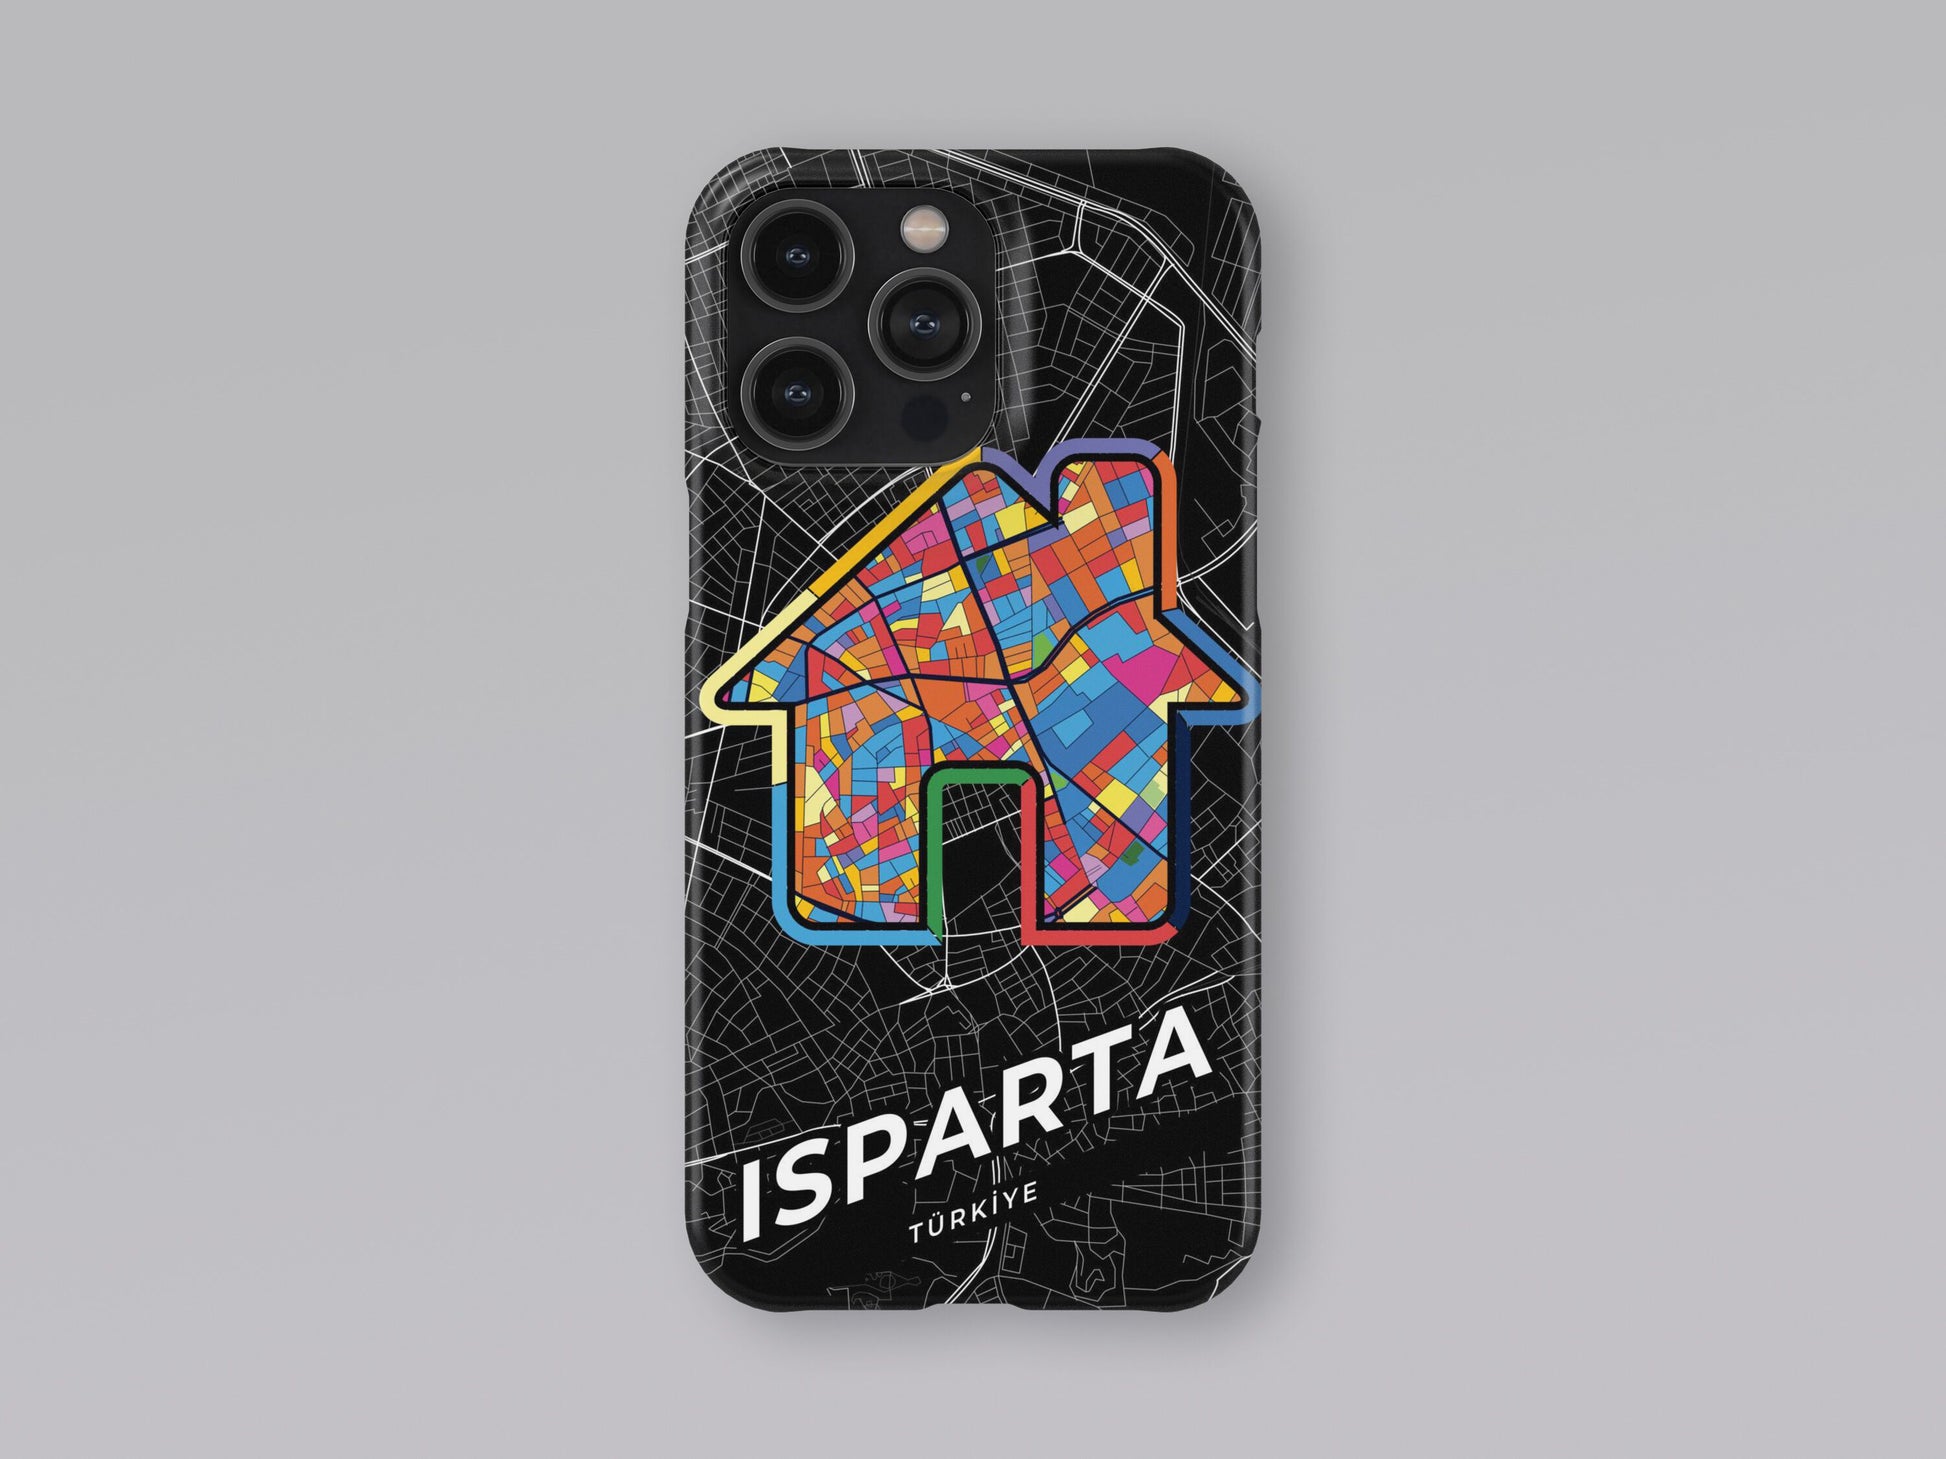 Isparta Turkey slim phone case with colorful icon. Birthday, wedding or housewarming gift. Couple match cases. 3